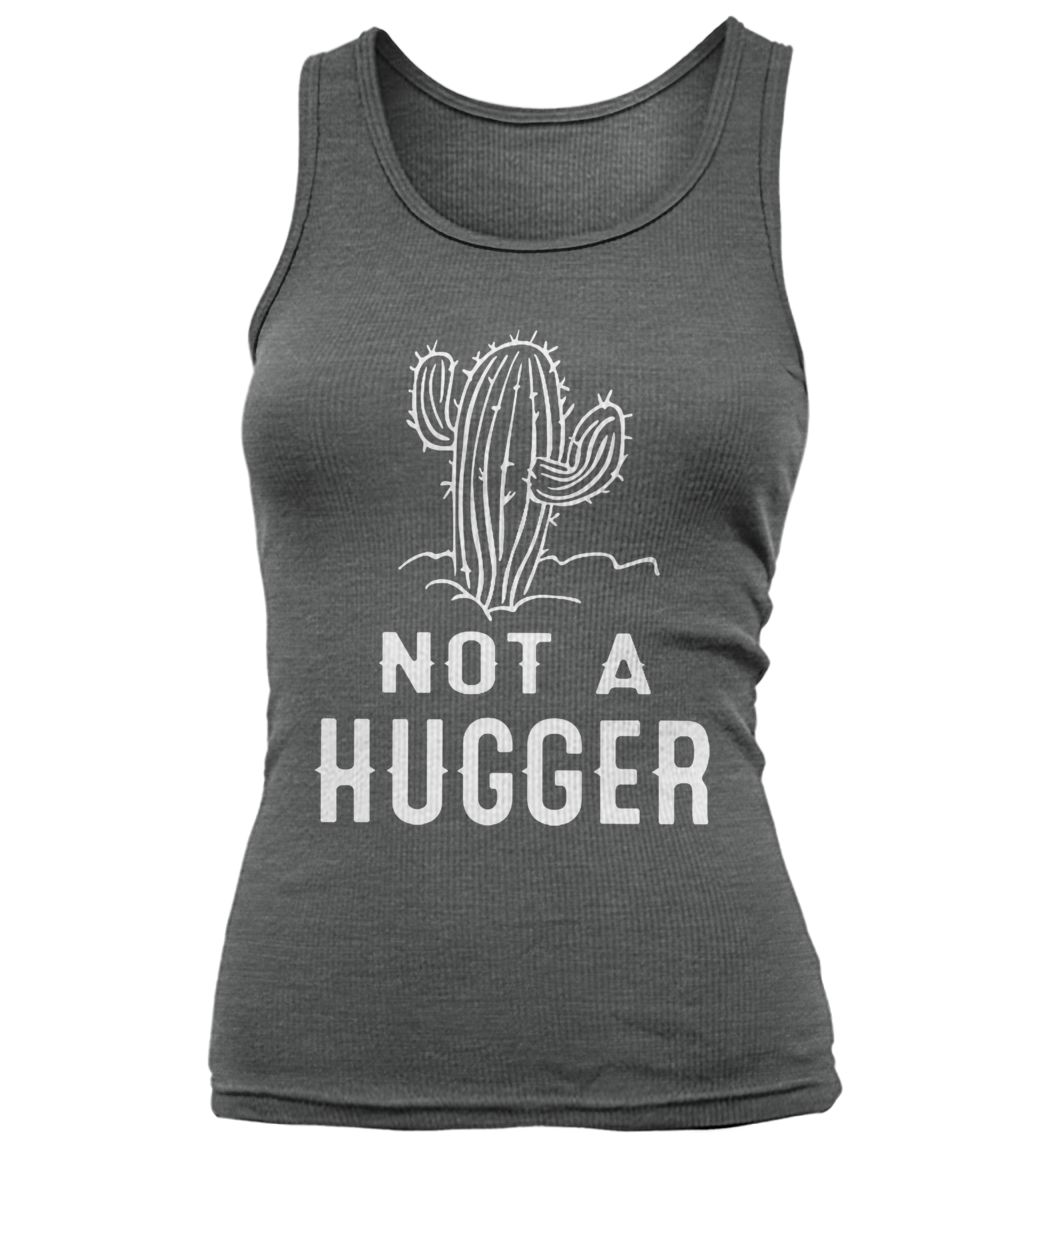 Not a hugger cactus women's tank top